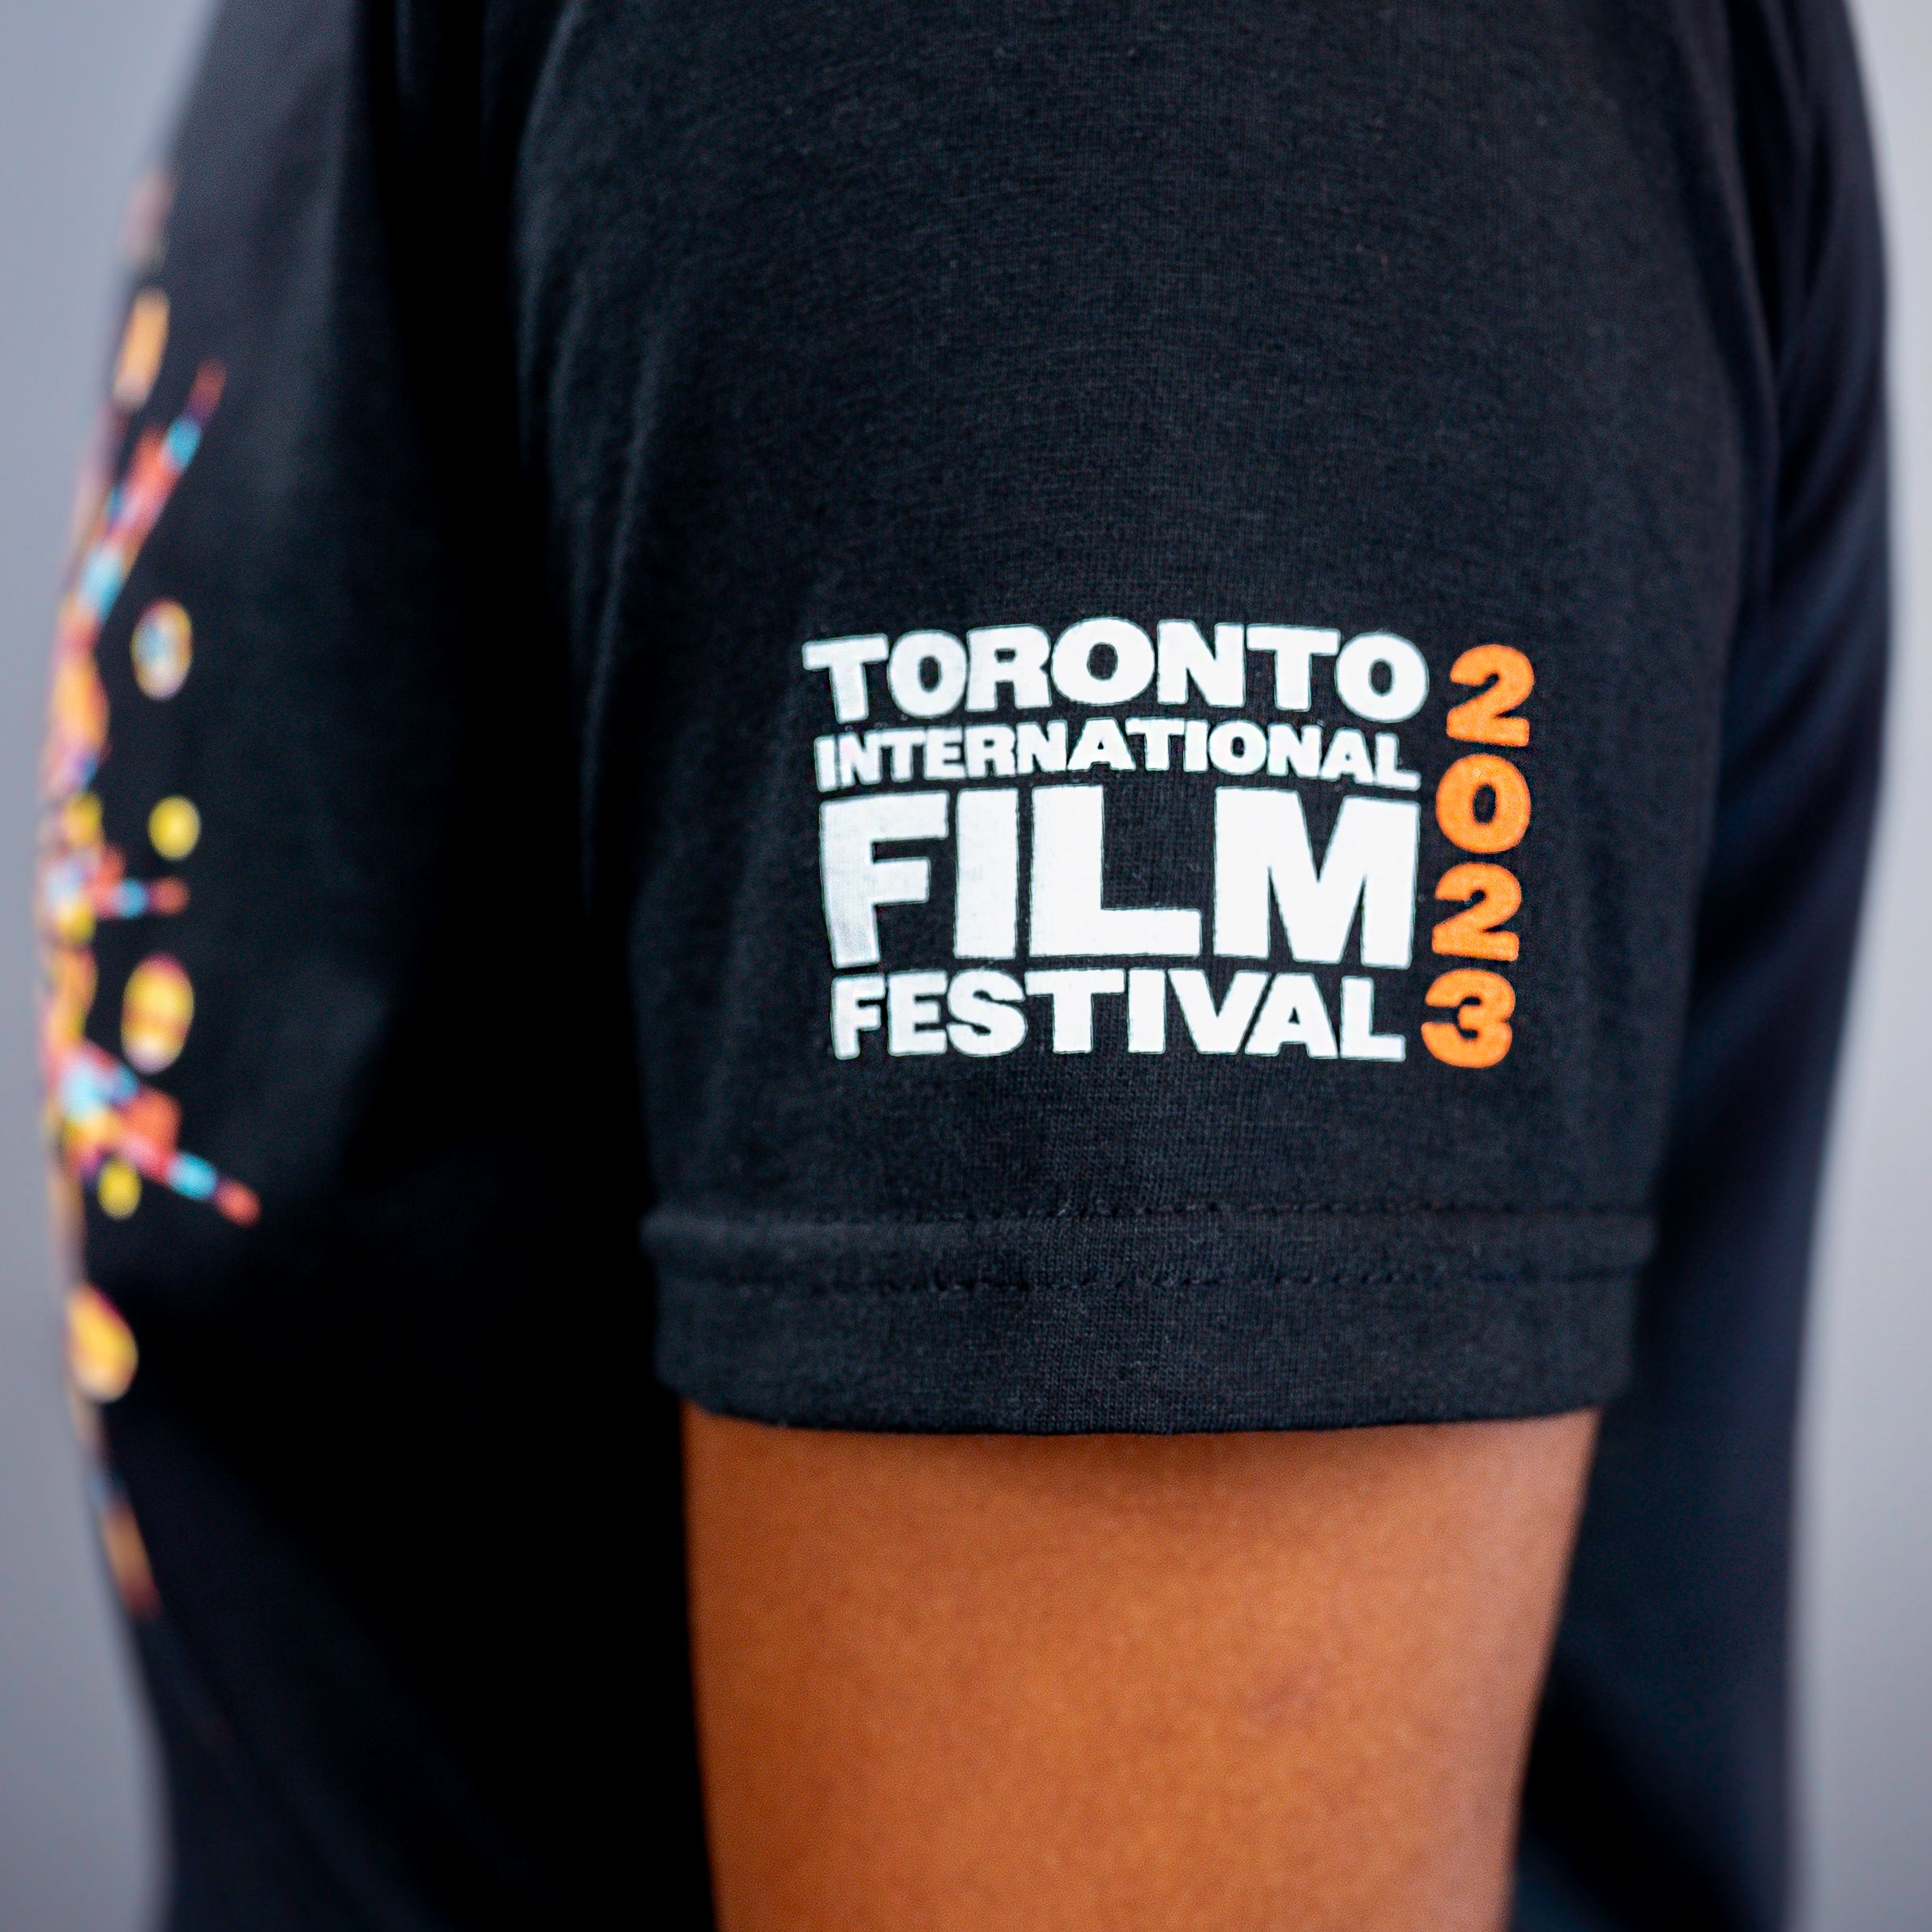 TIFF 2023 Festival logo on t-shirt sleeve